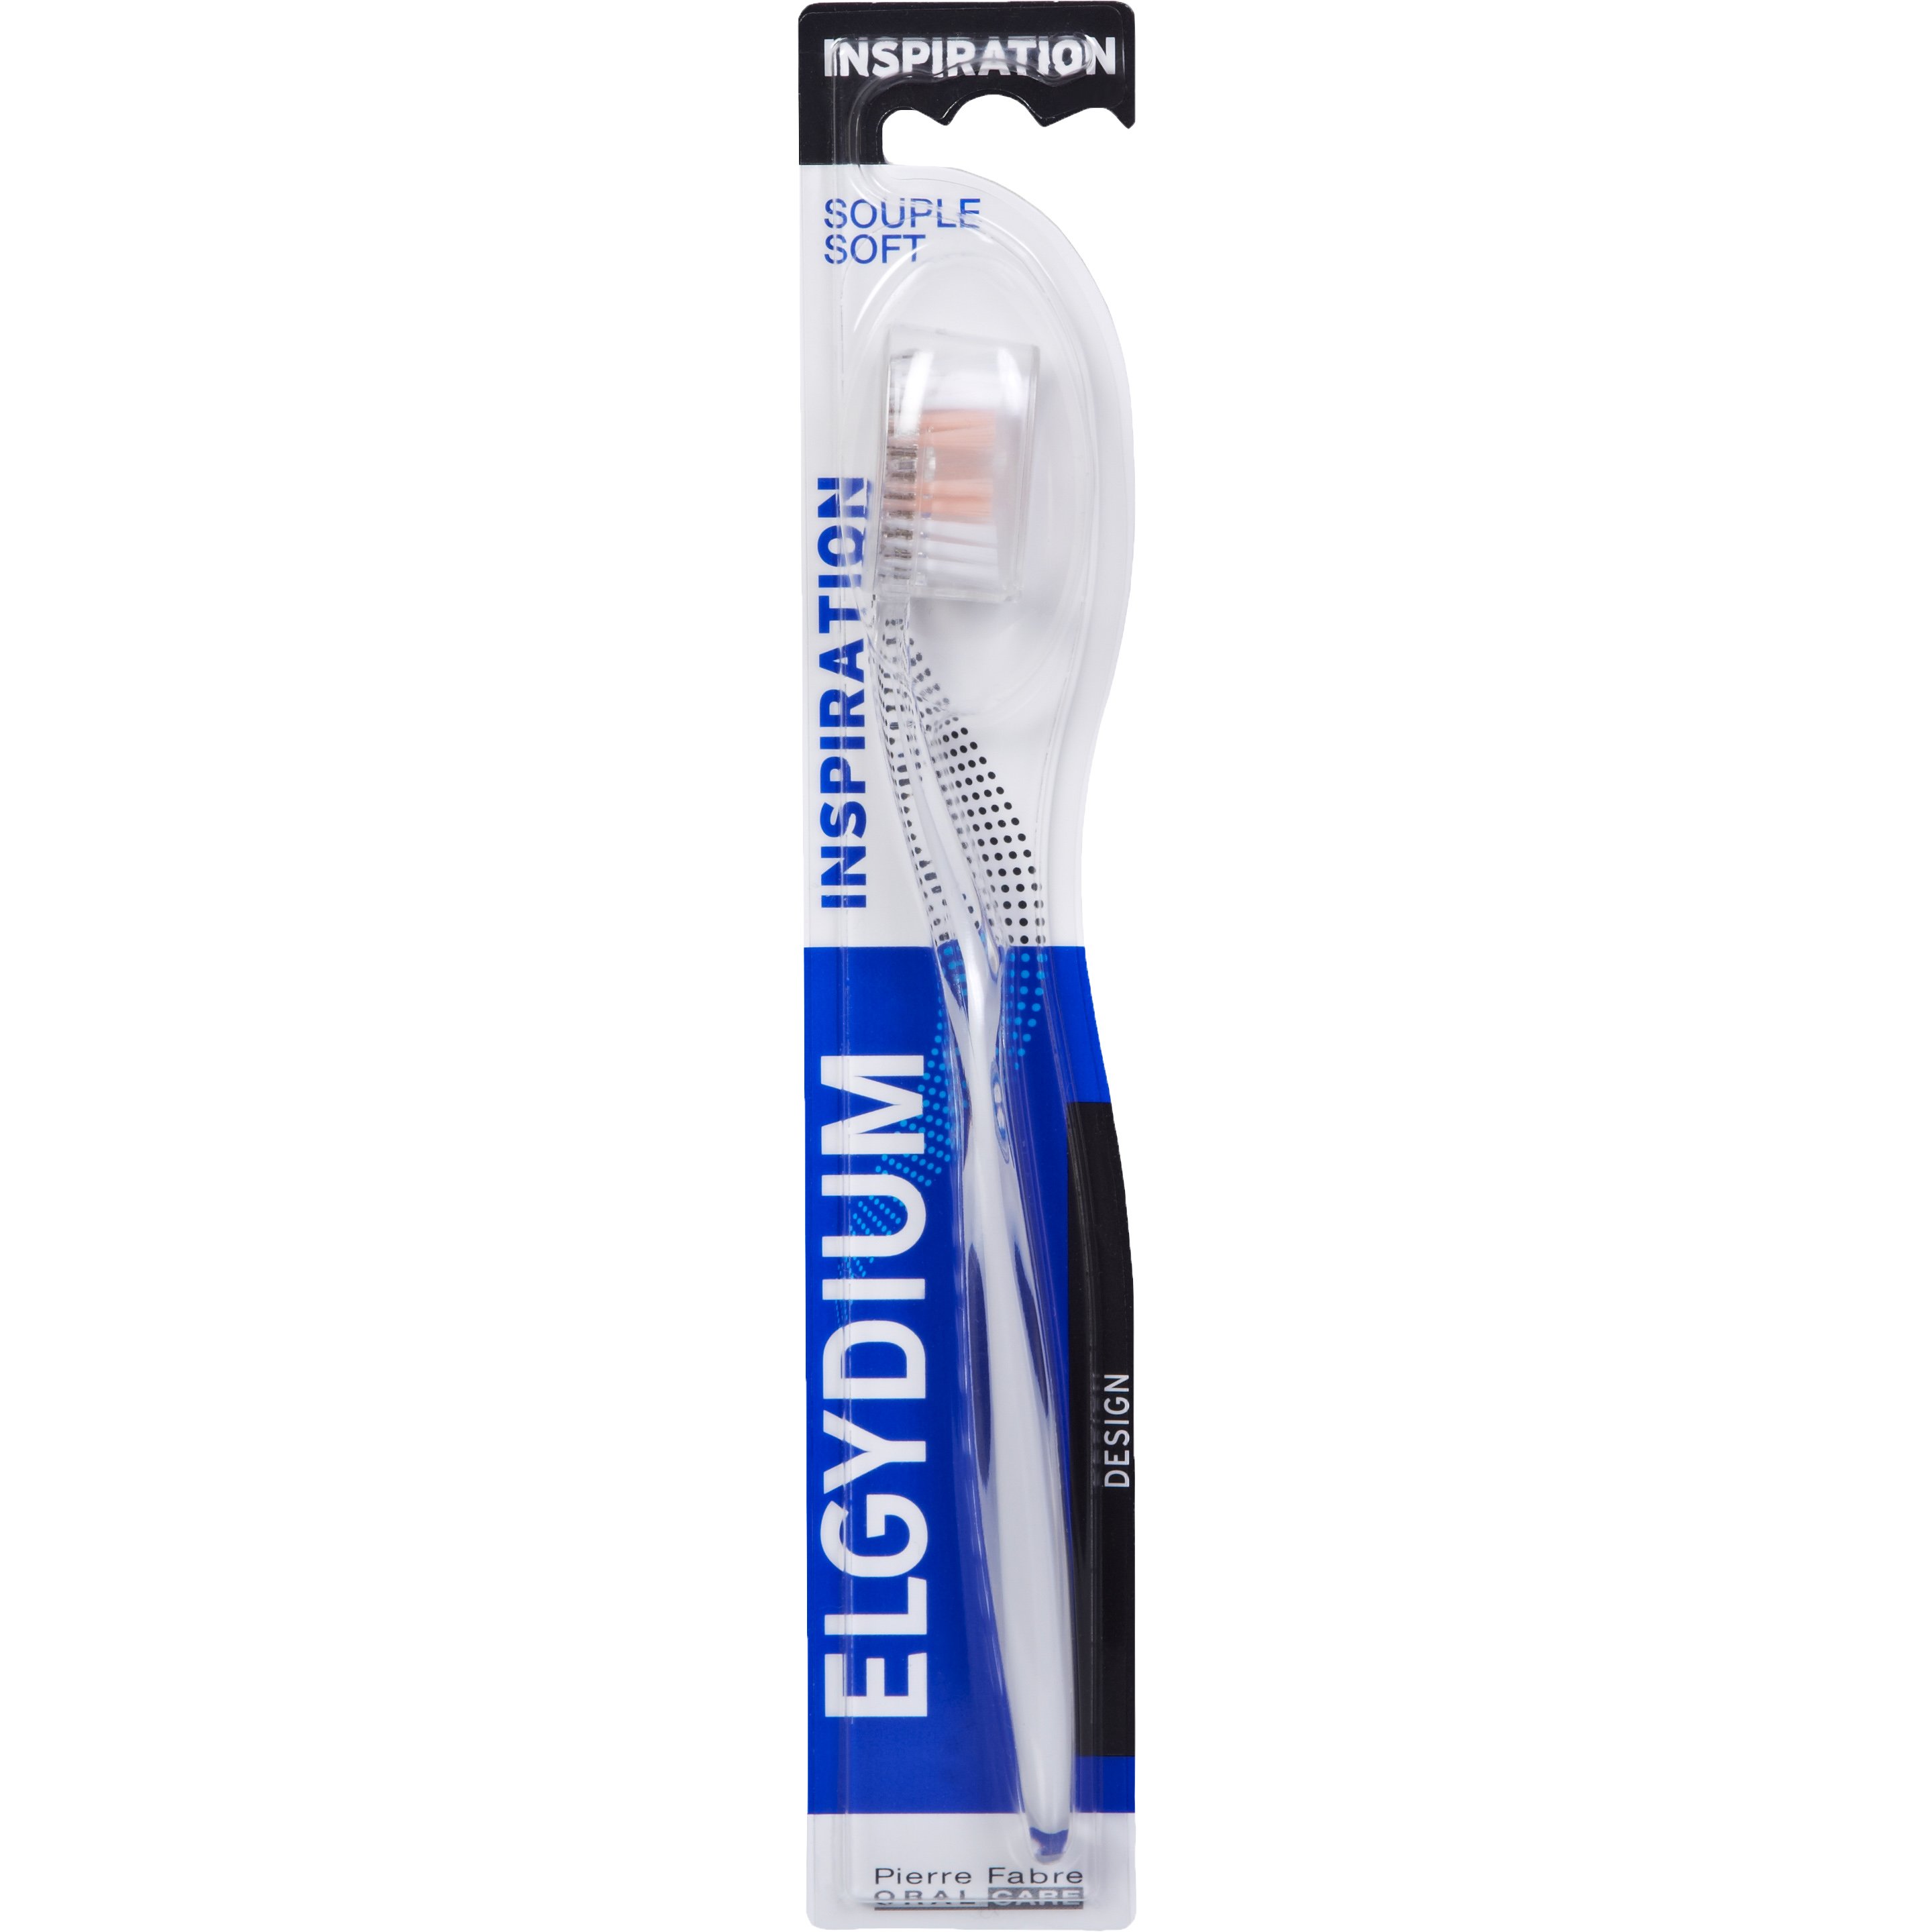 Elgydium Inspiration Medium Εργονομική Οδοντόβουρτσα Για Άνετο Καθαρισμό Και Στα Πιο Δύσκολα Σημεία Μεσαίο Μέγεθος 1 τμχ – μπλέ